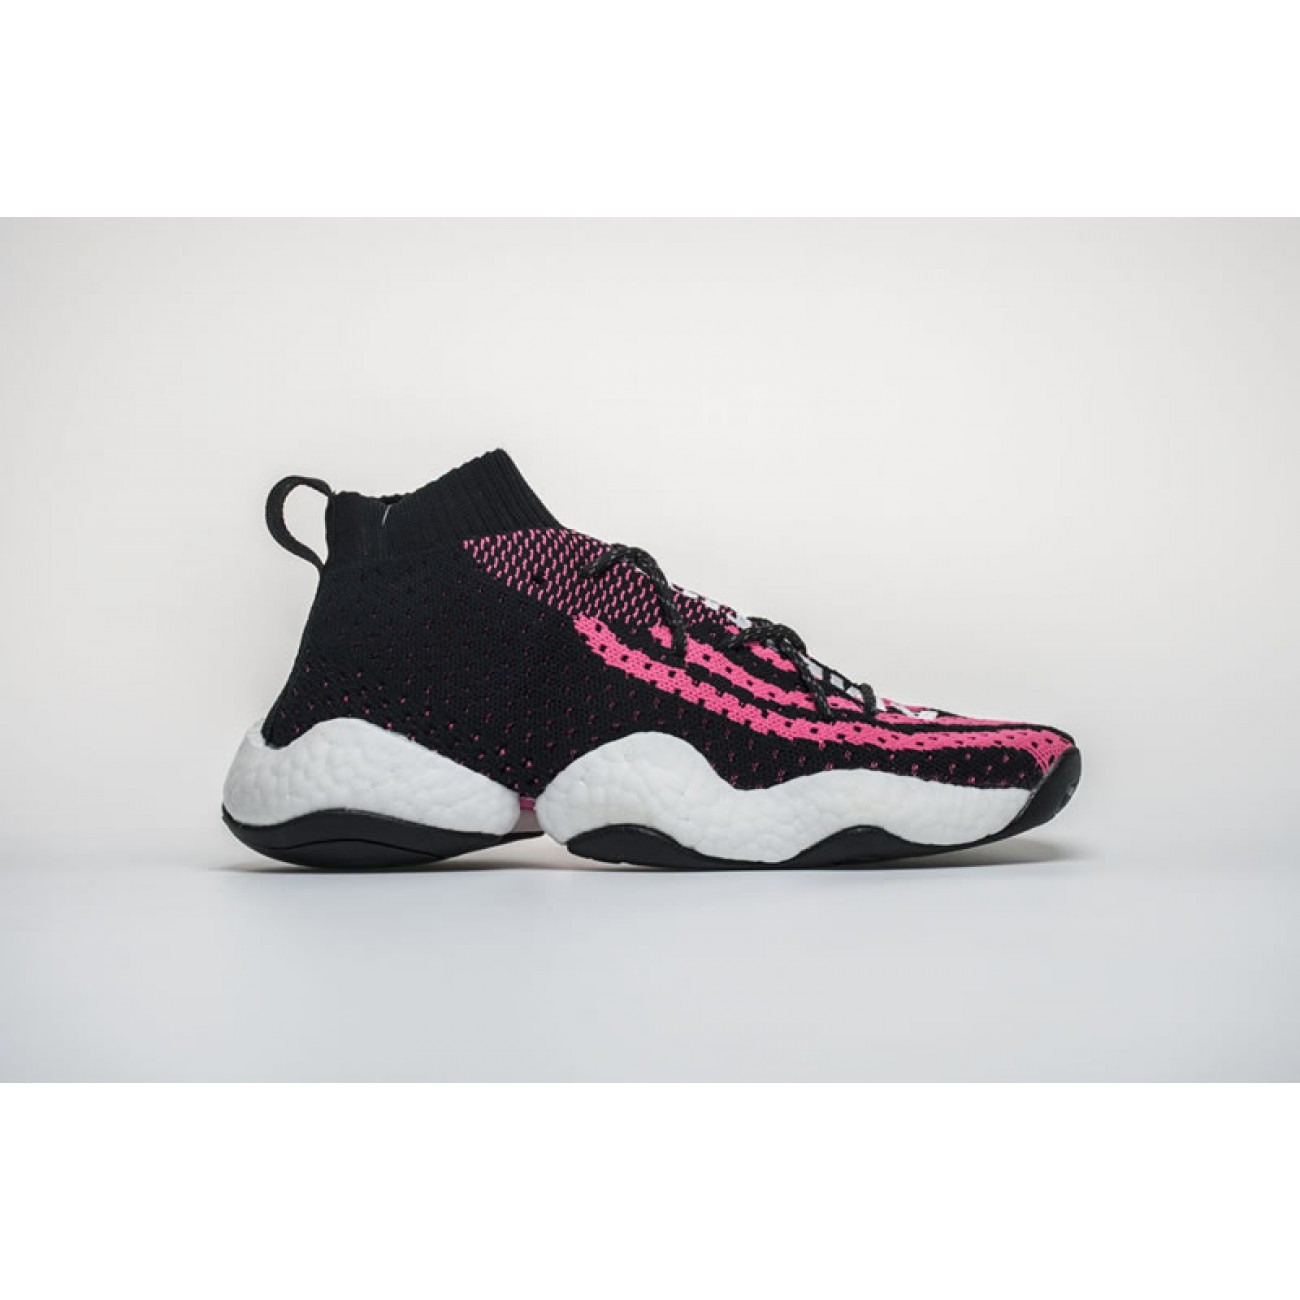 Pharrell Williams x adidas Crazy BYW "Solar Pink" Black Mens Womens Size Basketball Shoes G28182